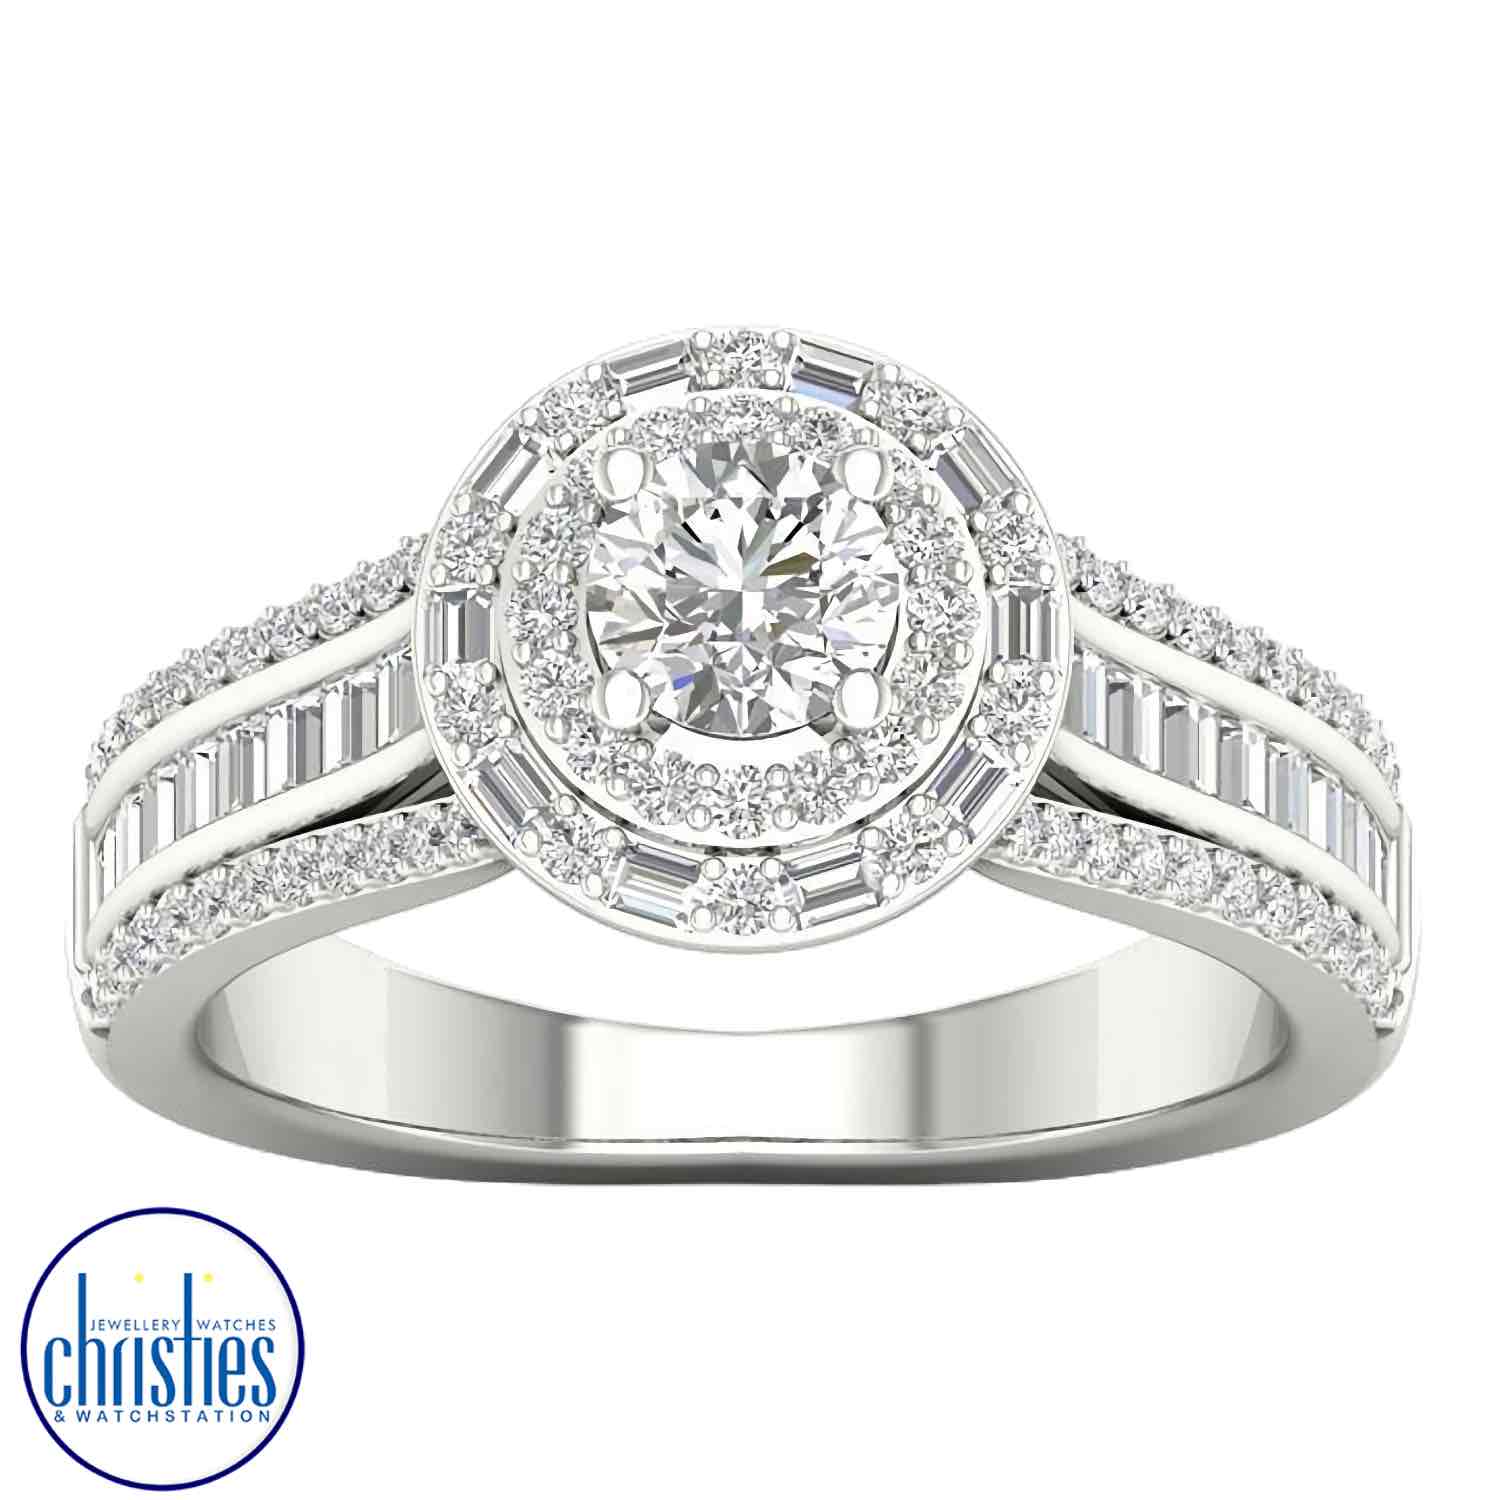 18ct White Gold Diamond Ring 1.00ct TDW RB20016EG.  Affordable Engagement Rings Nz $5,995.00